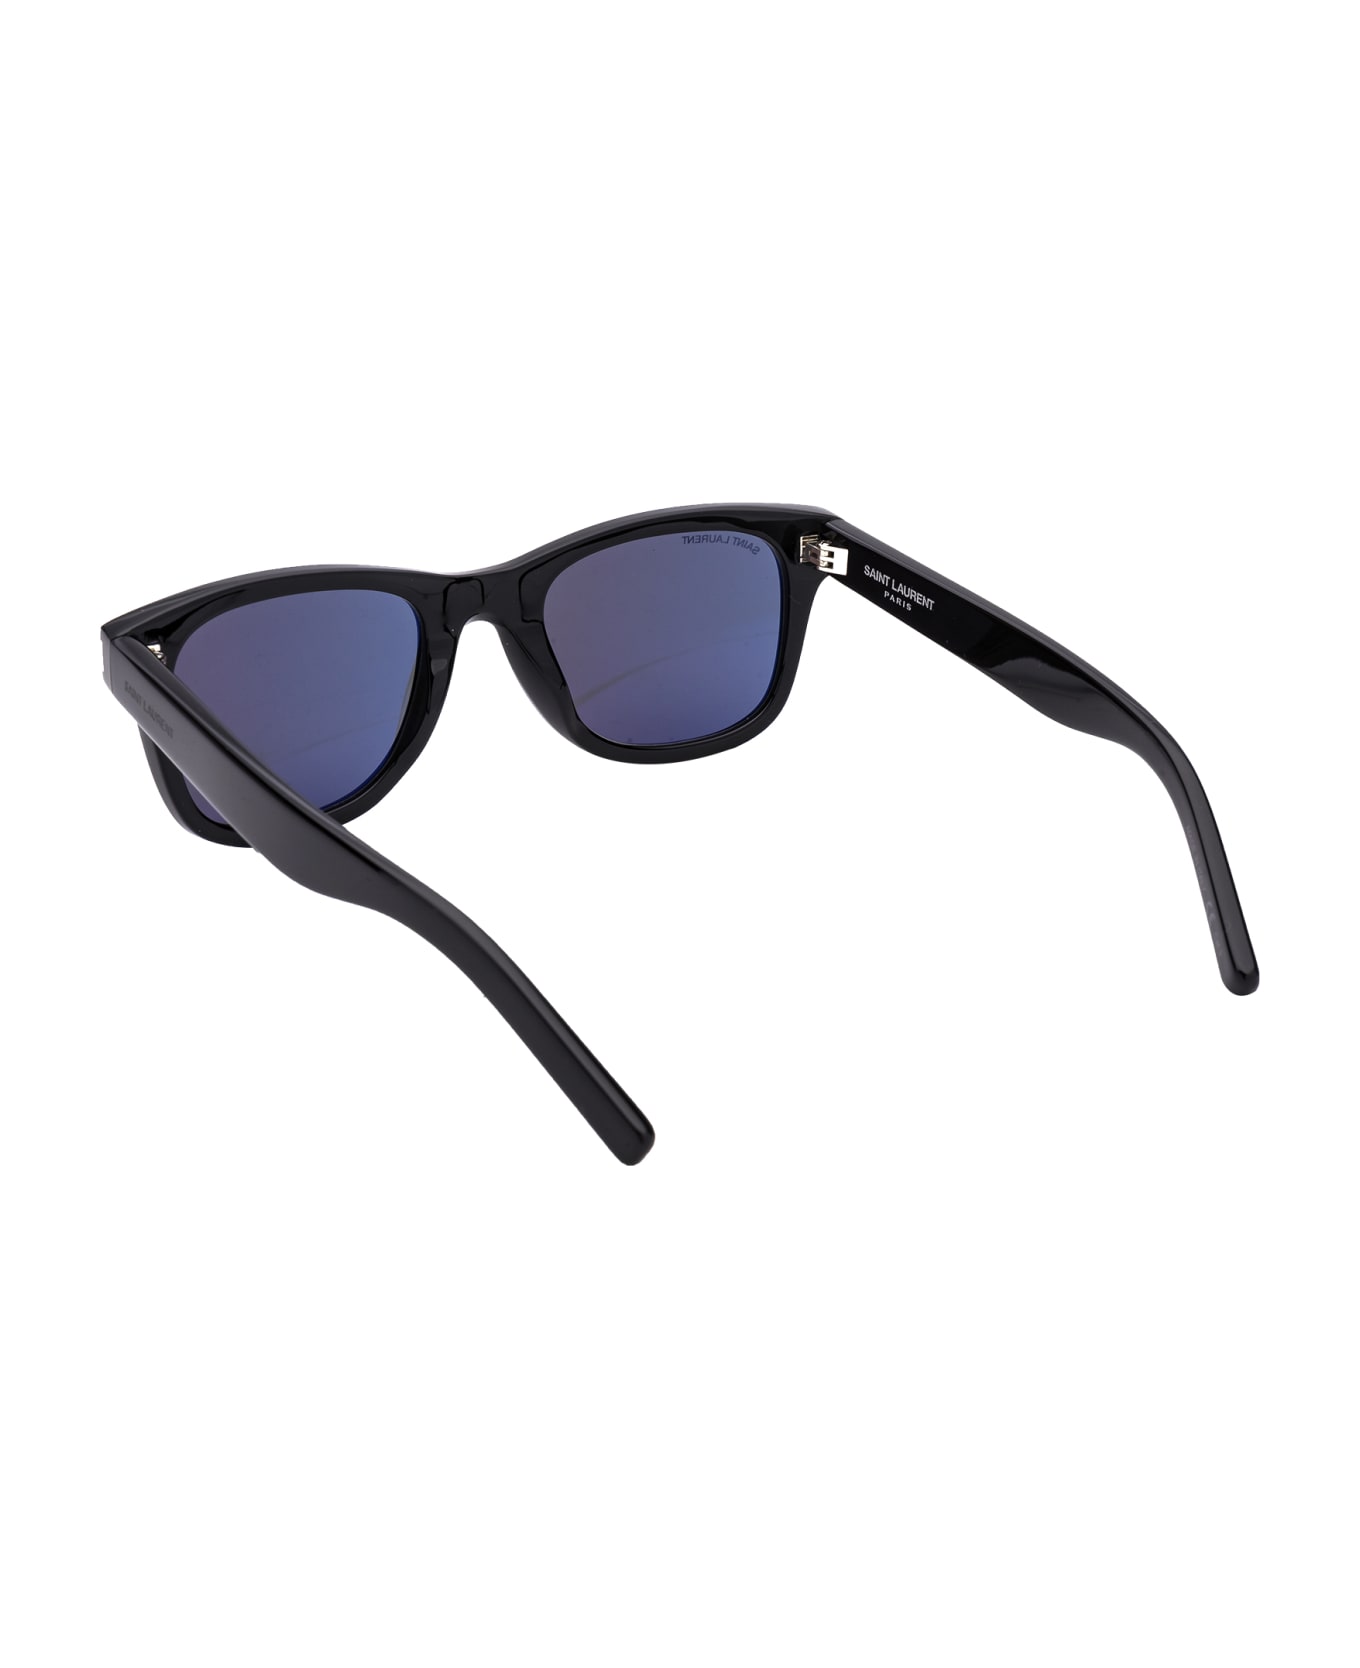 Saint Laurent Eyewear Sl 51 Sunglasses - 002 Ray-ban Rb4259 Black Sunglasses